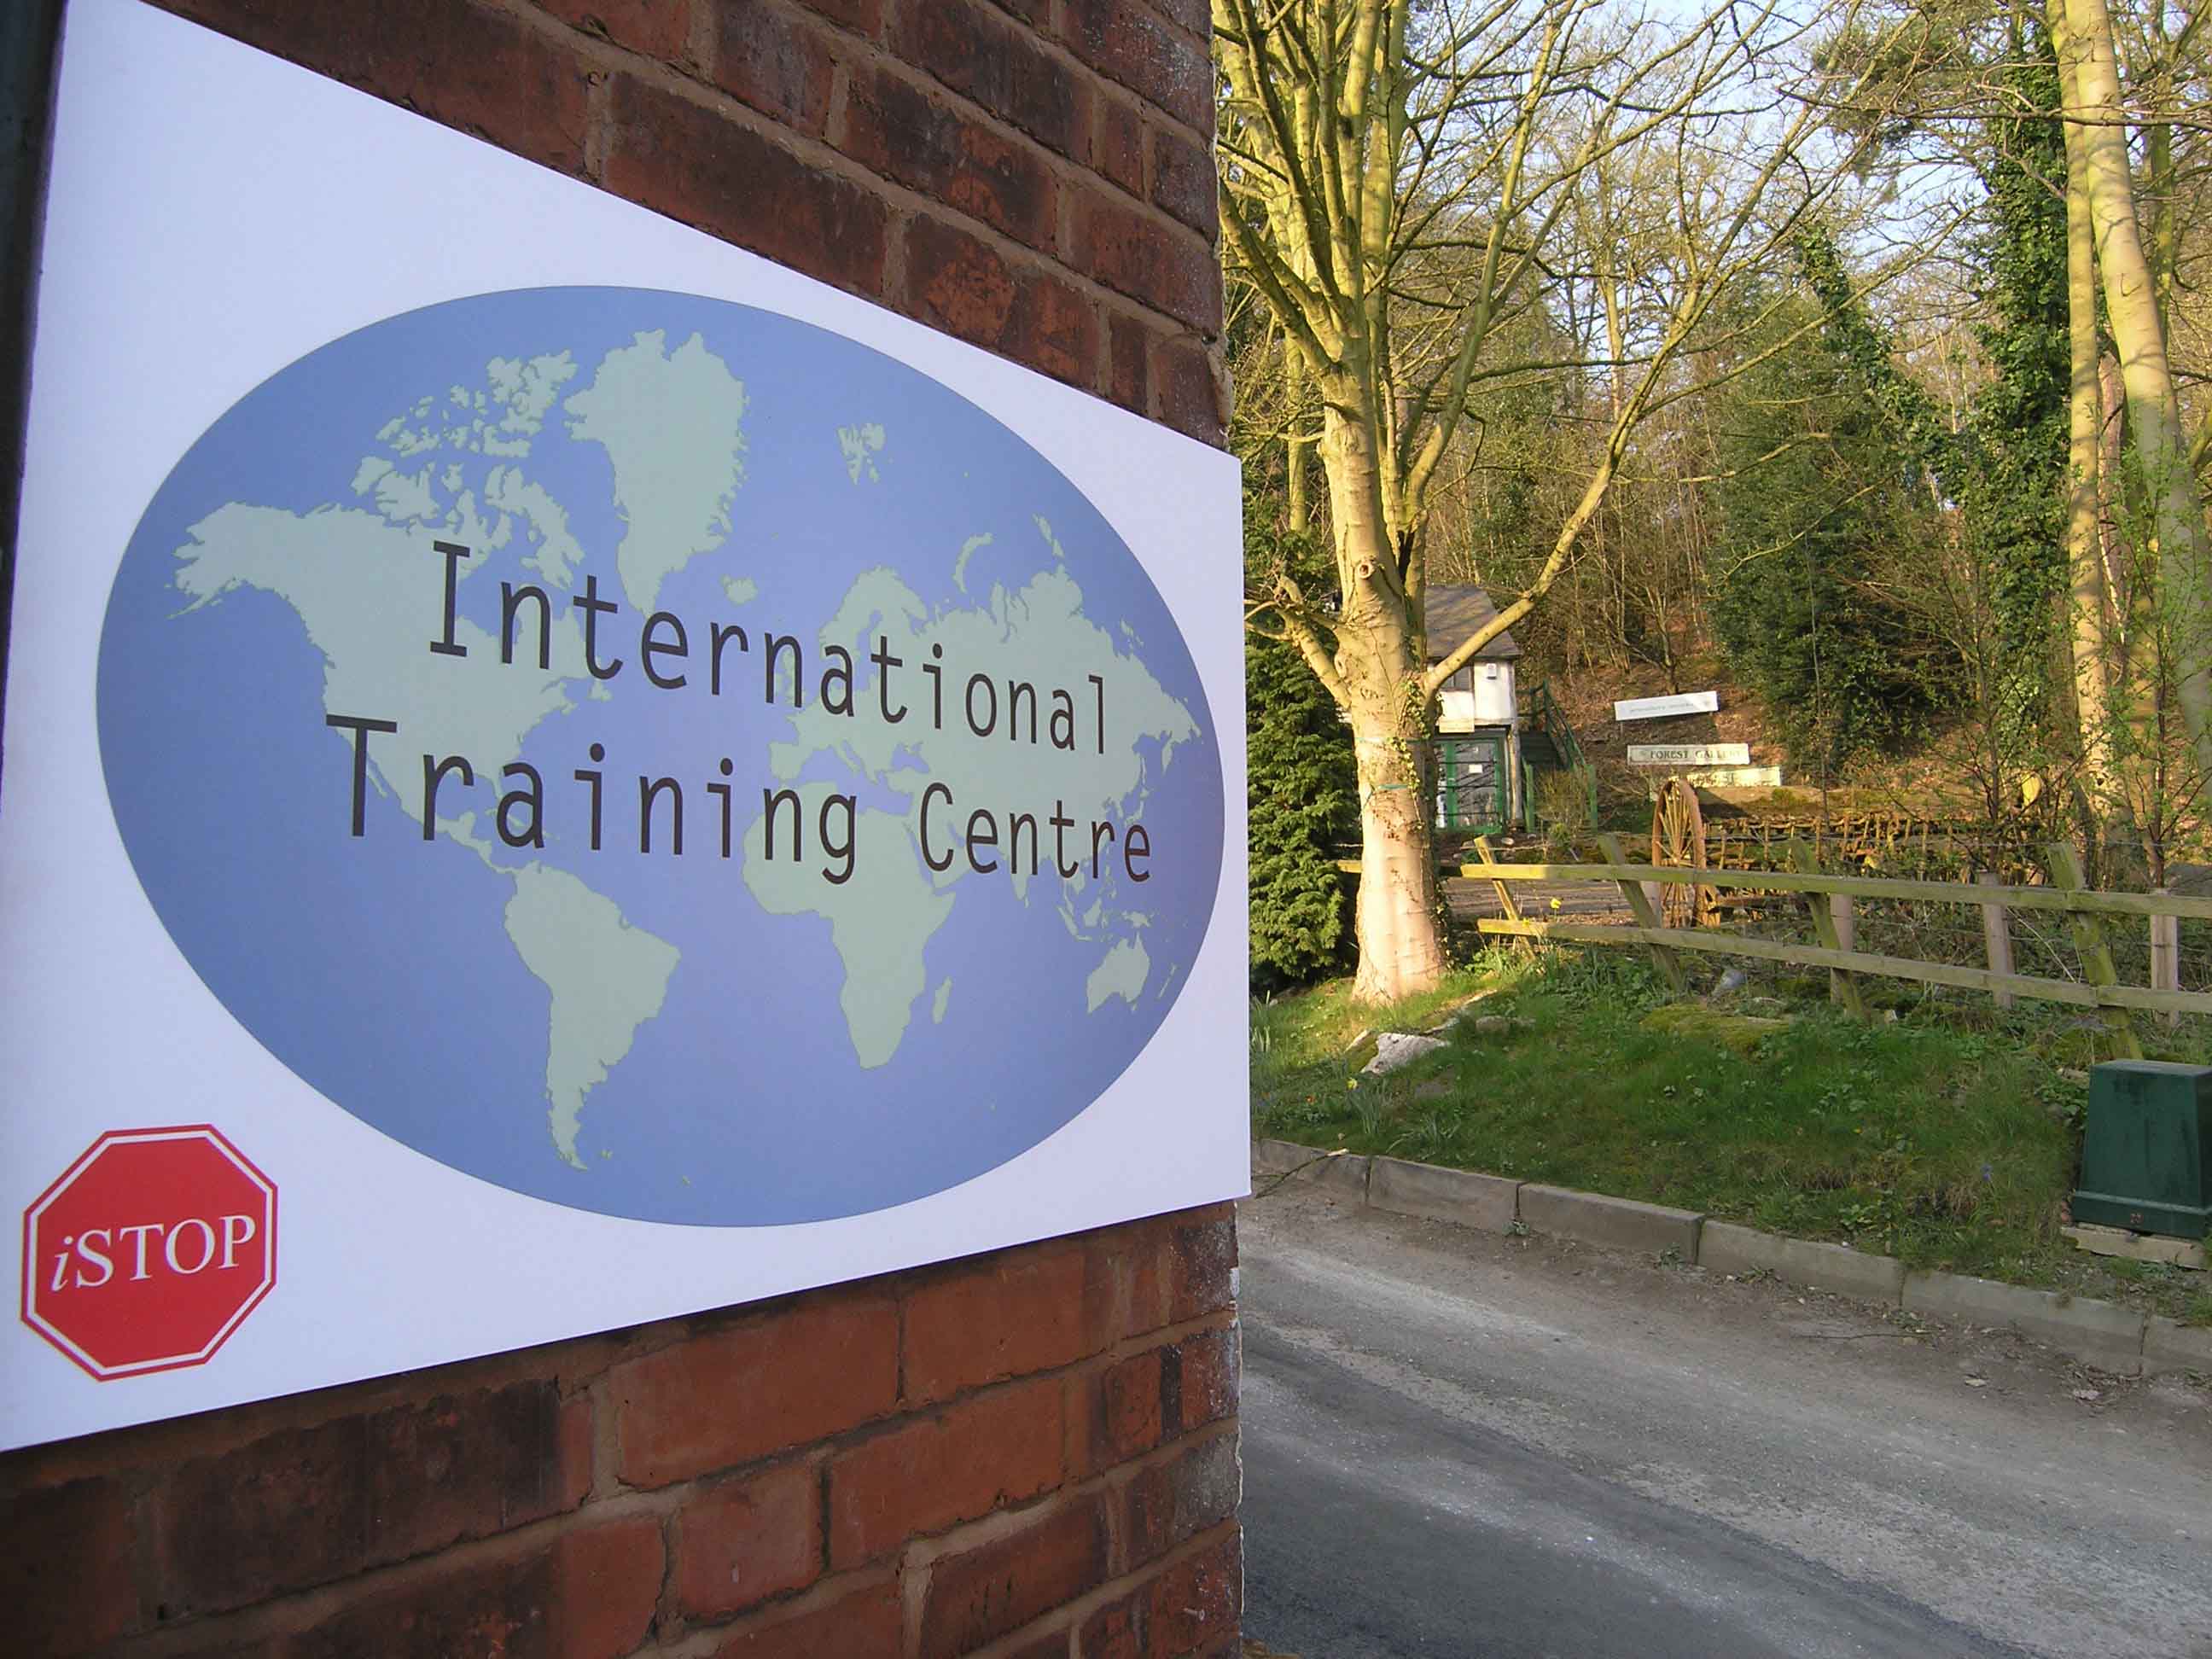 International Training Centre